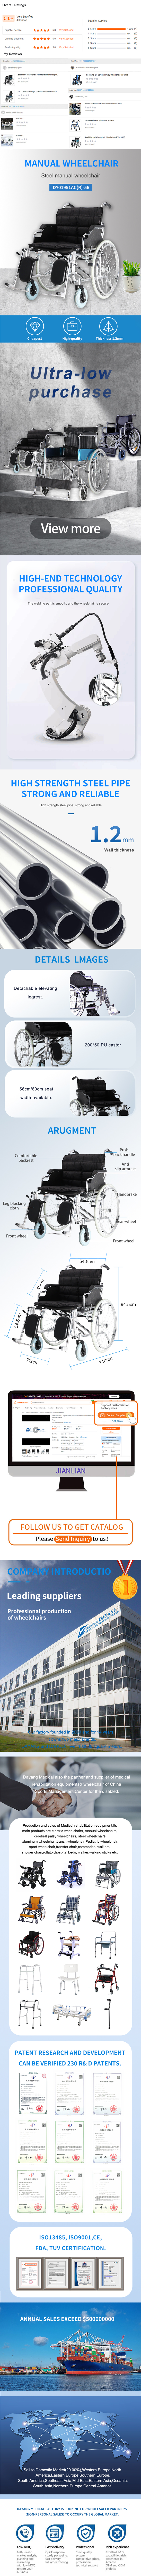 custom made wheelchair